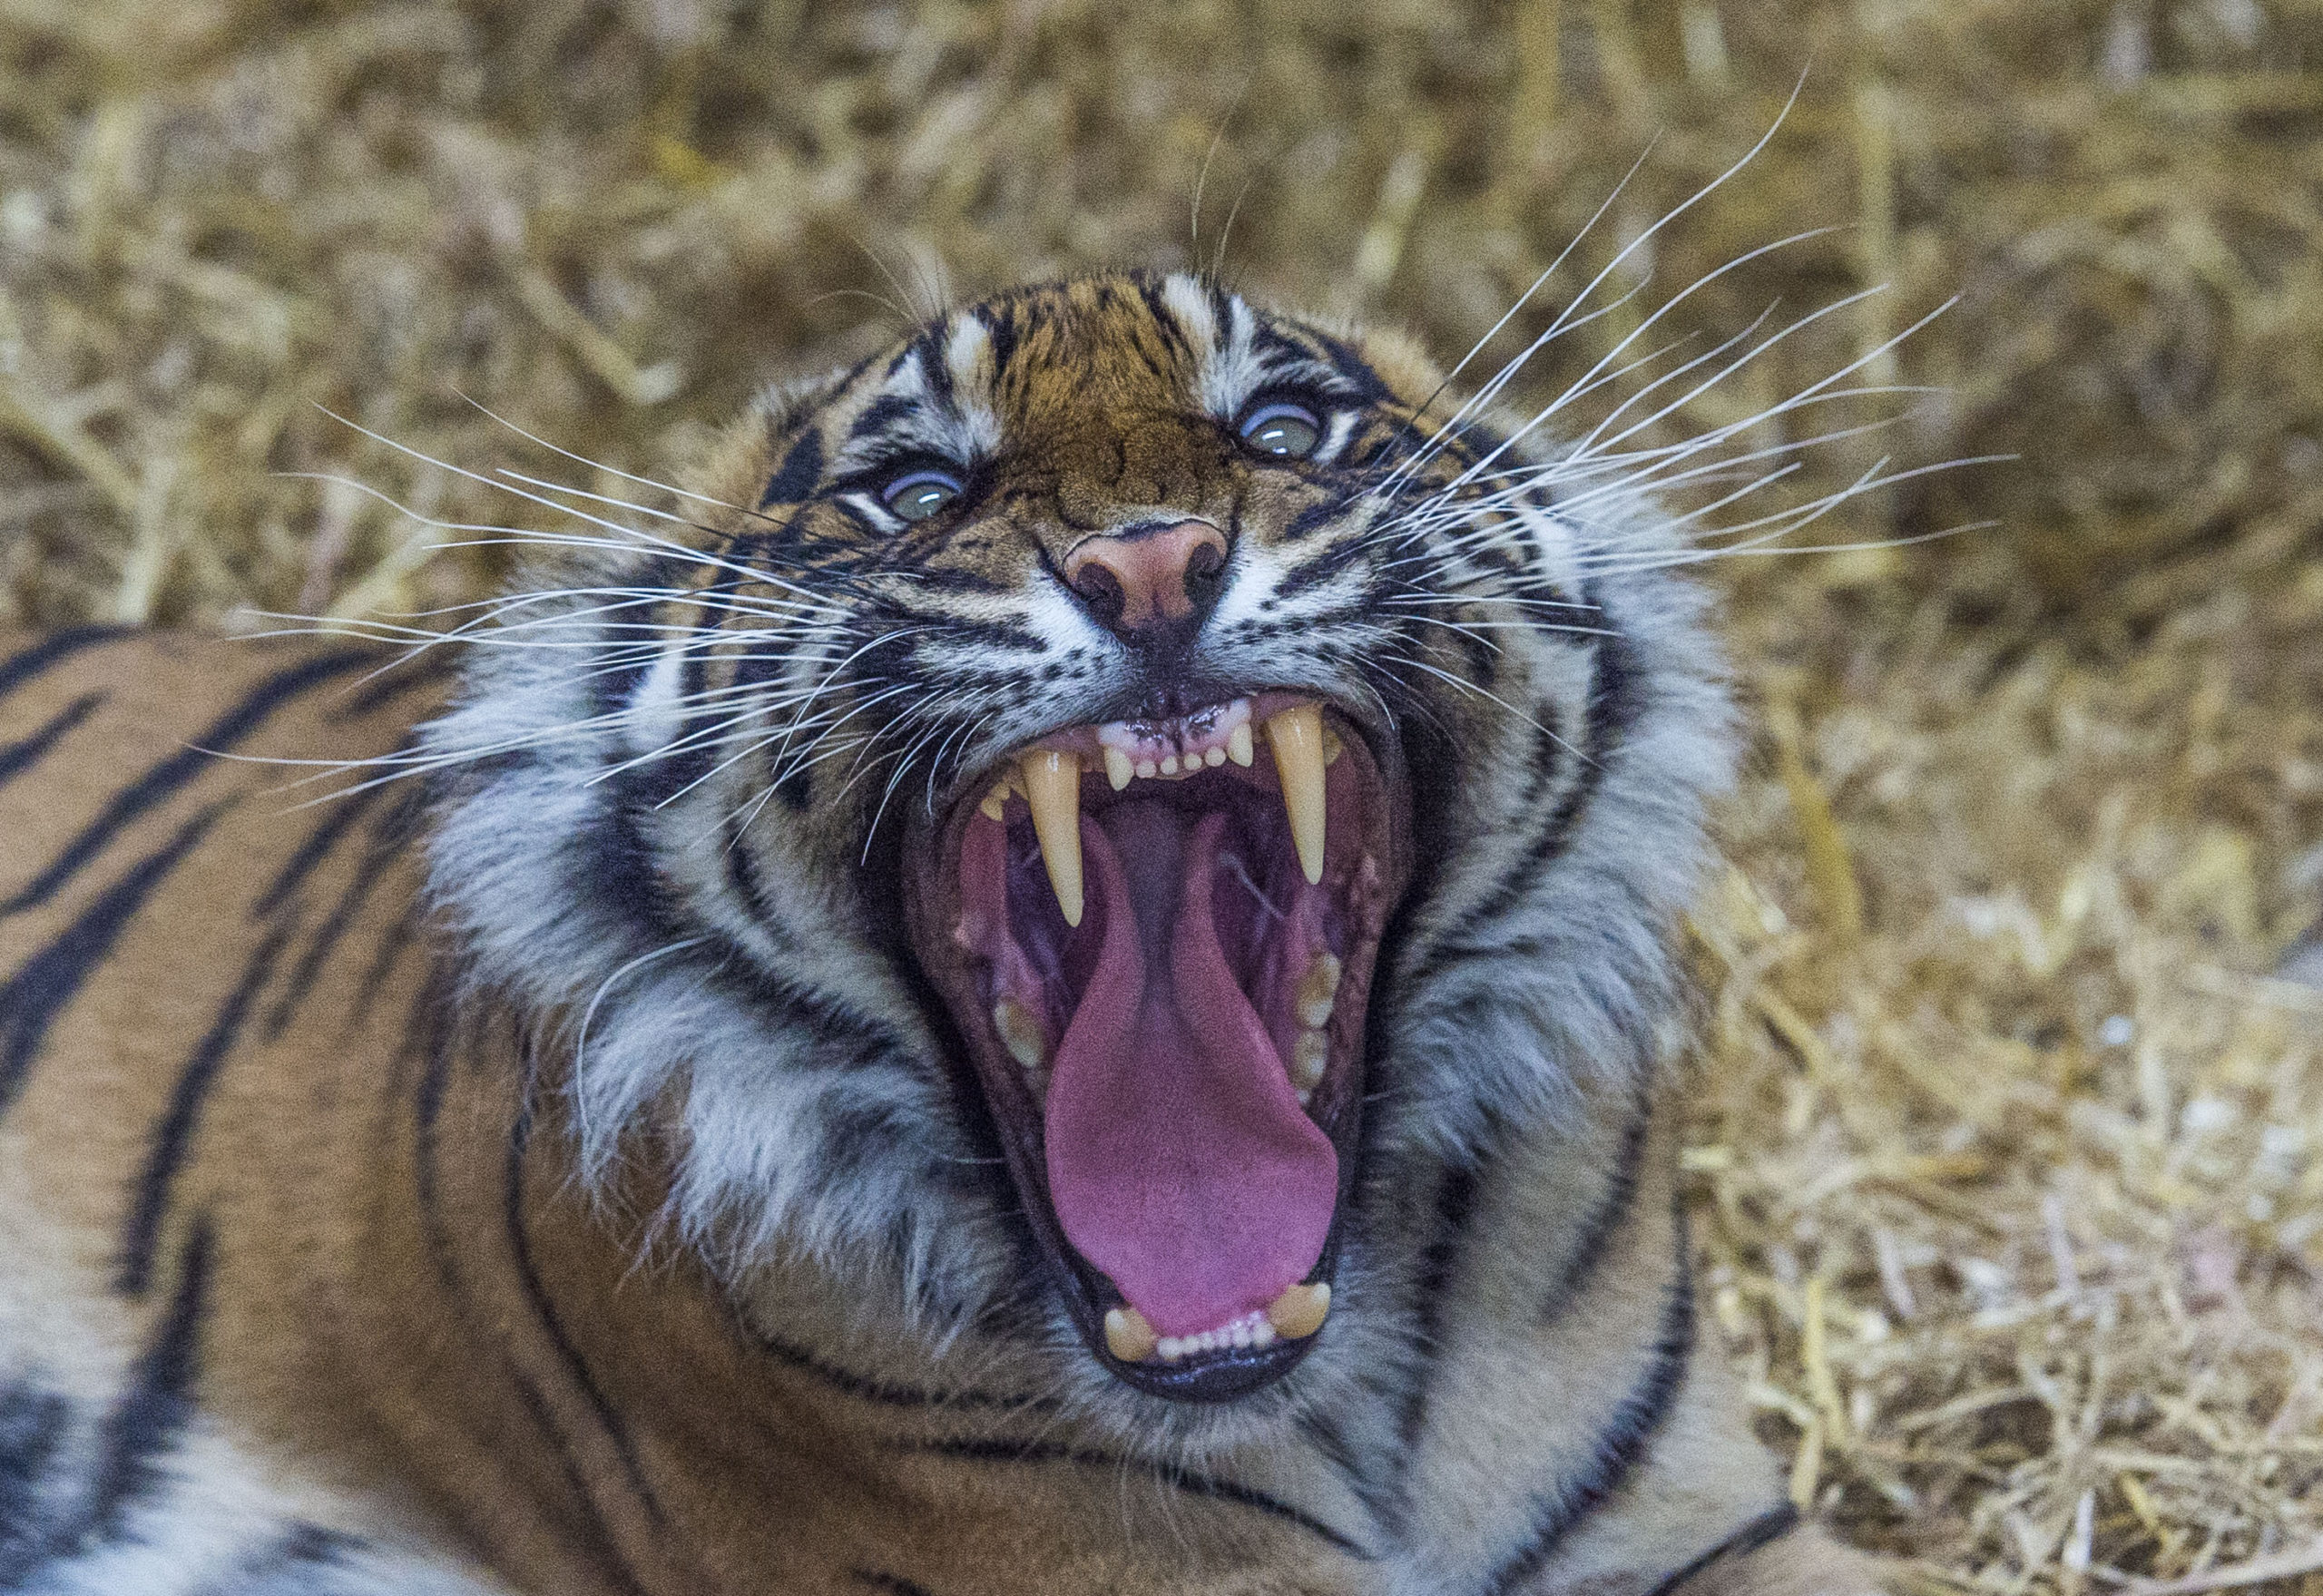 Dharma The Tiger welcomes visitors back to Edinburgh Zoo.